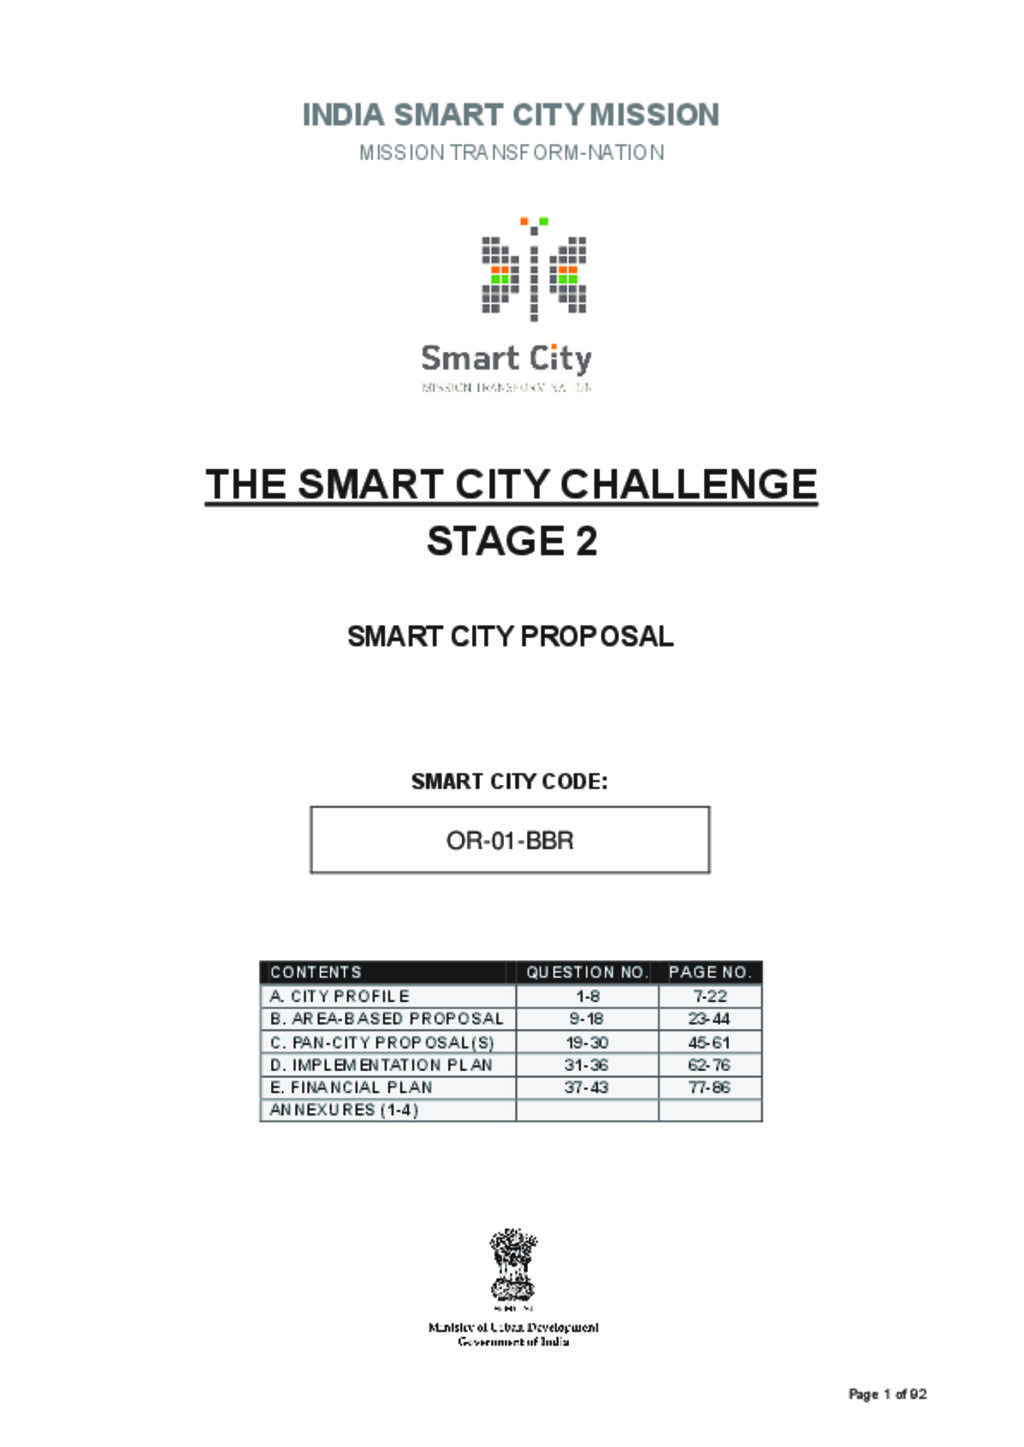 Bhubaneswar Smart City Plan